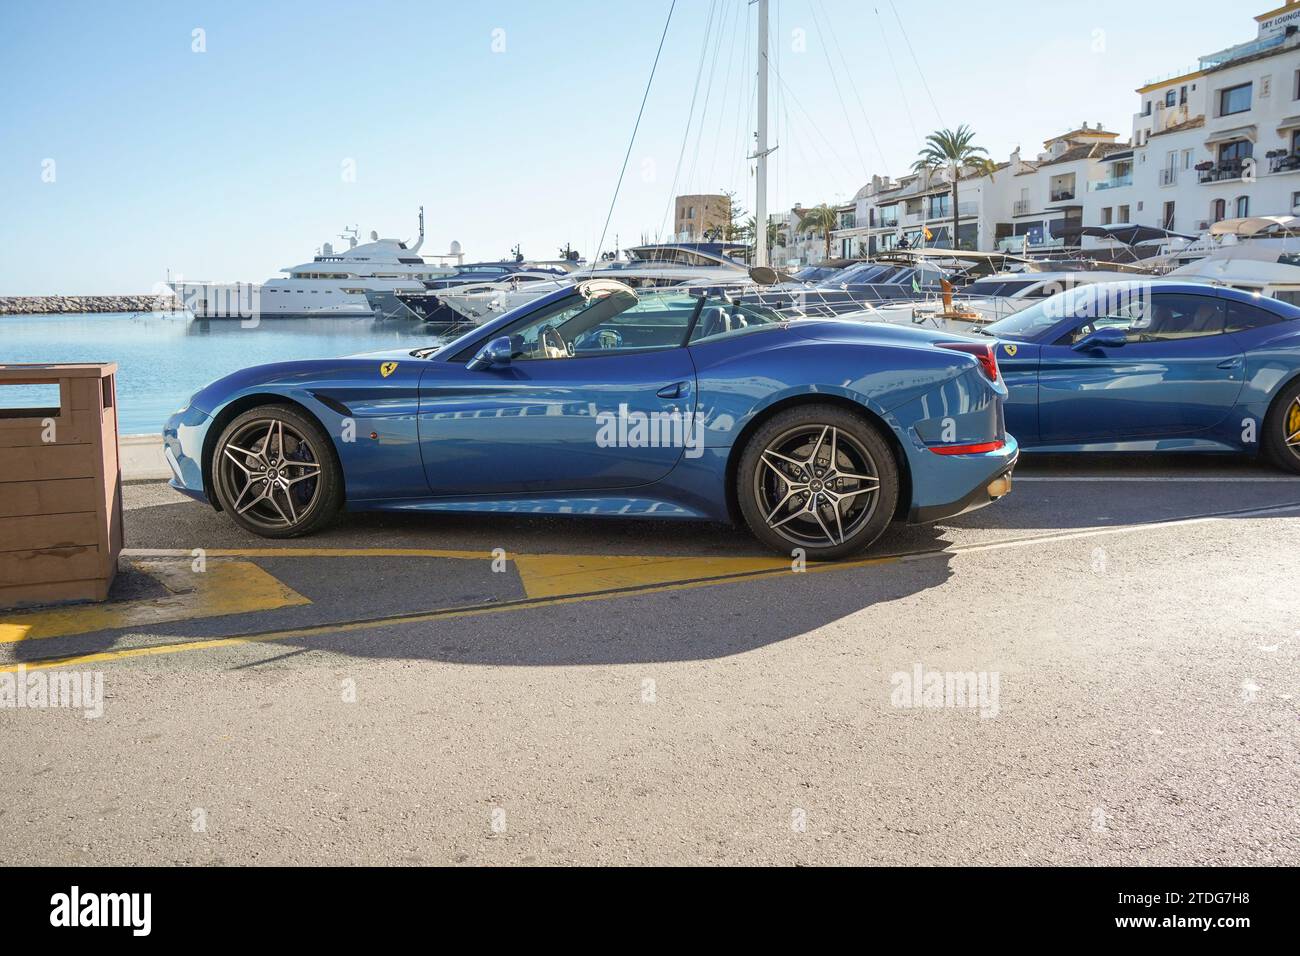 Ferrari parked in luxury Port of Puerto Banus, Marbella, Costa del Sol, Spain. Stock Photo